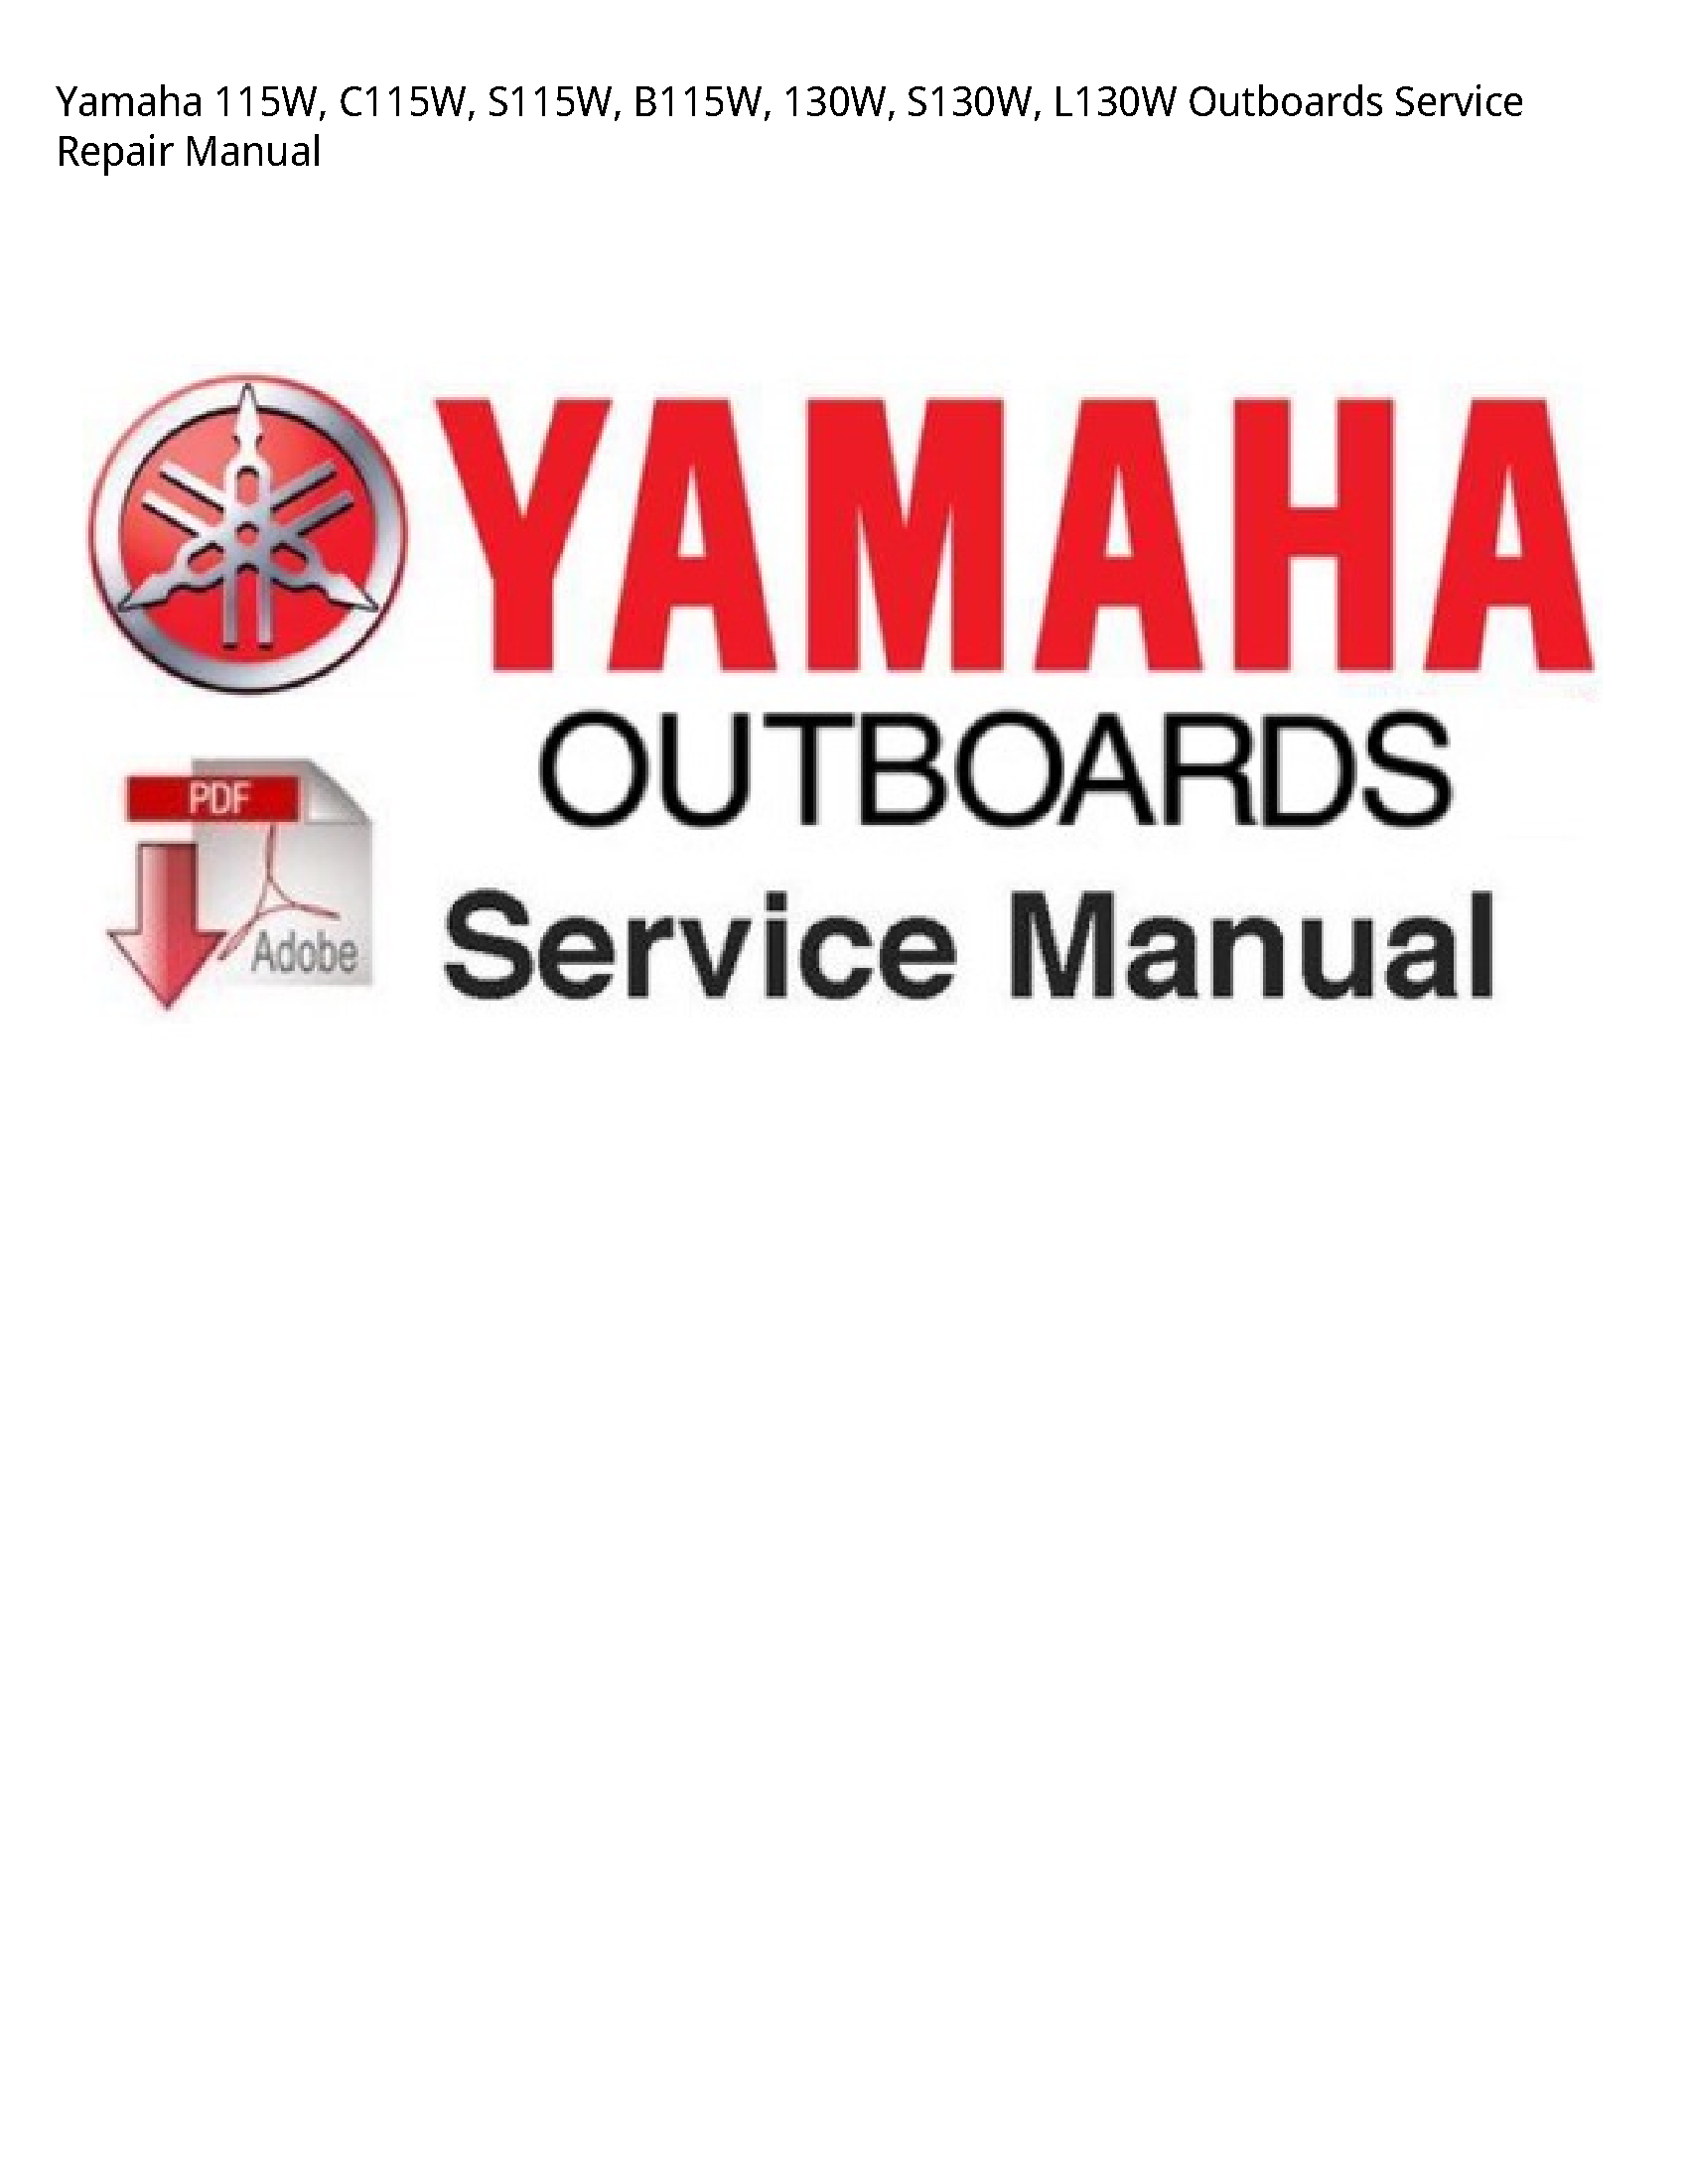 Yamaha 115W Outboards manual